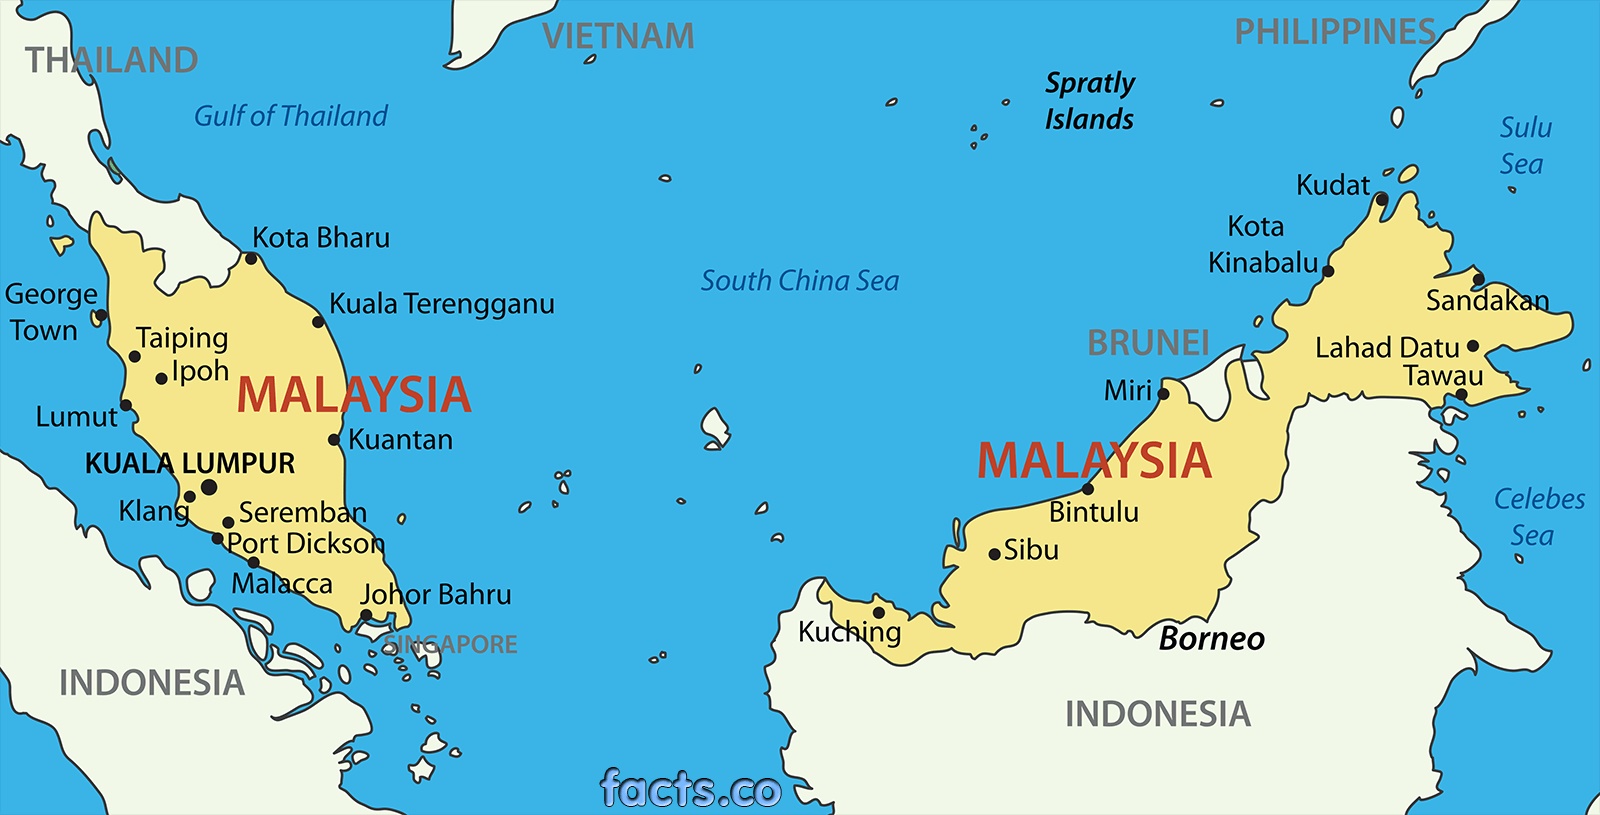 8 Insightful Maps for Malaysia - ExpatGo